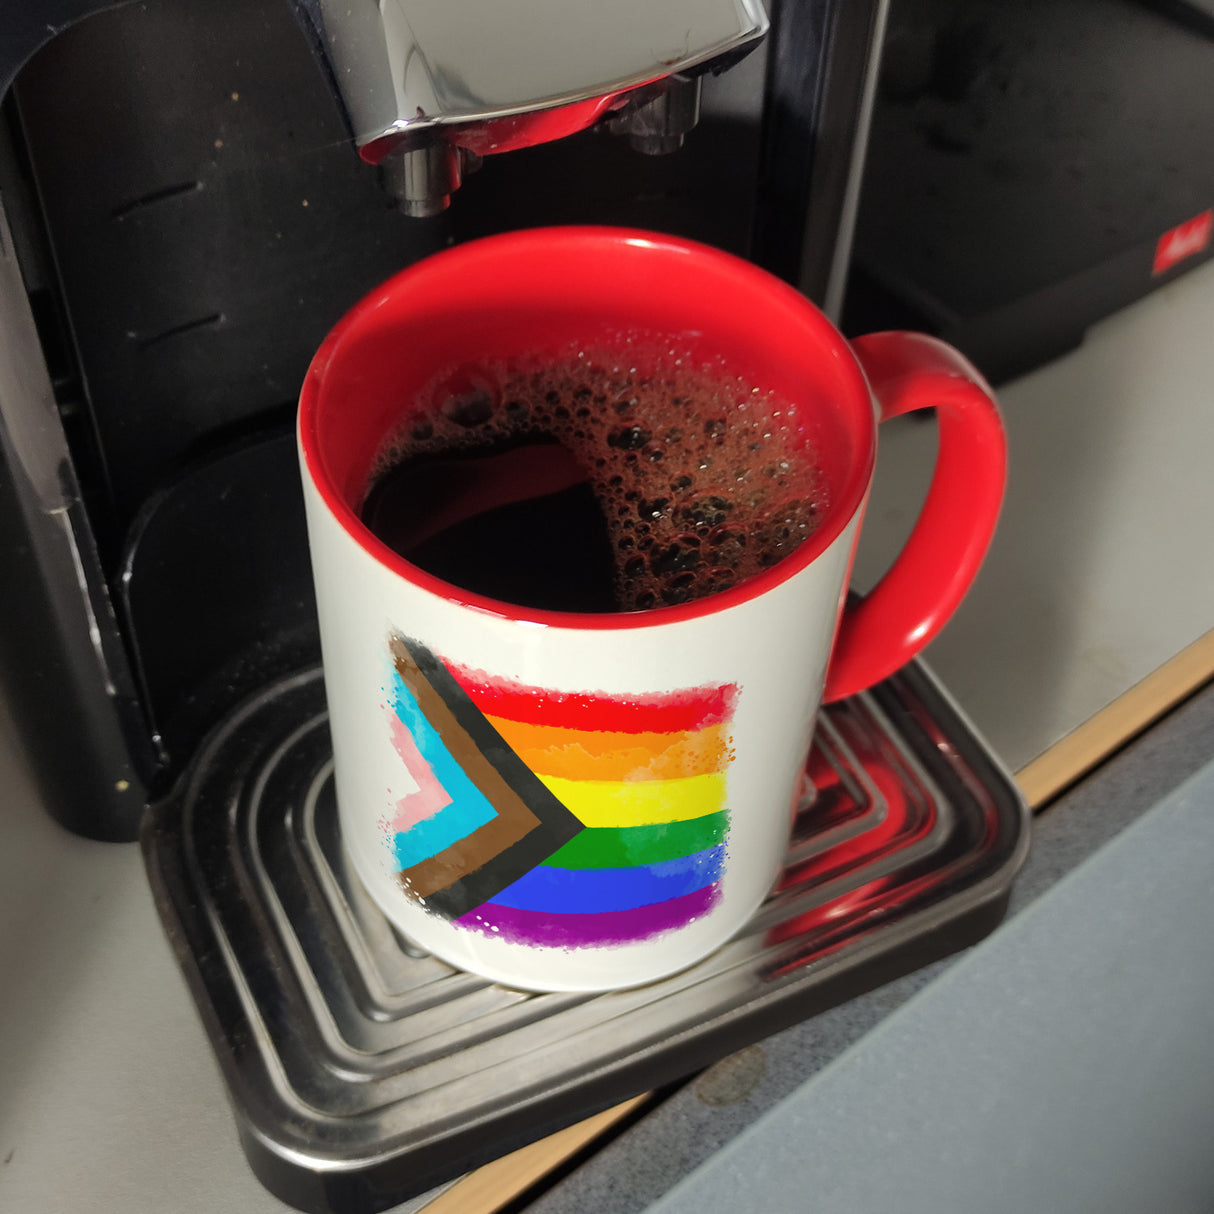 Progress-Pride-Flagge Kaffeebecher